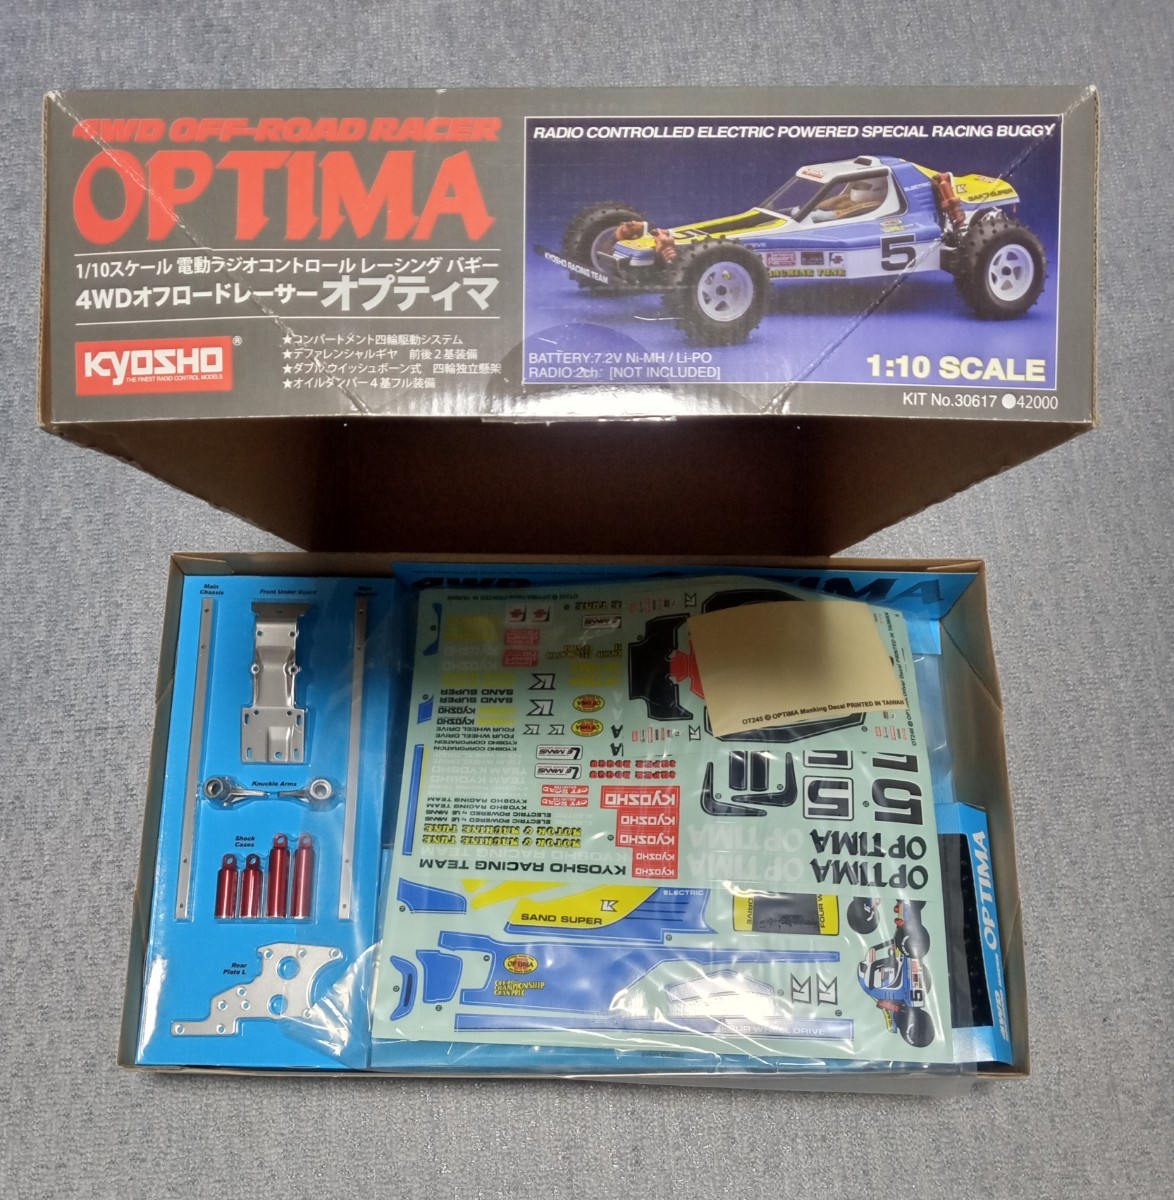 1/10 EP 4WDレーシングバギー オプティマ (組立てキット) 30617 京商 復刻版